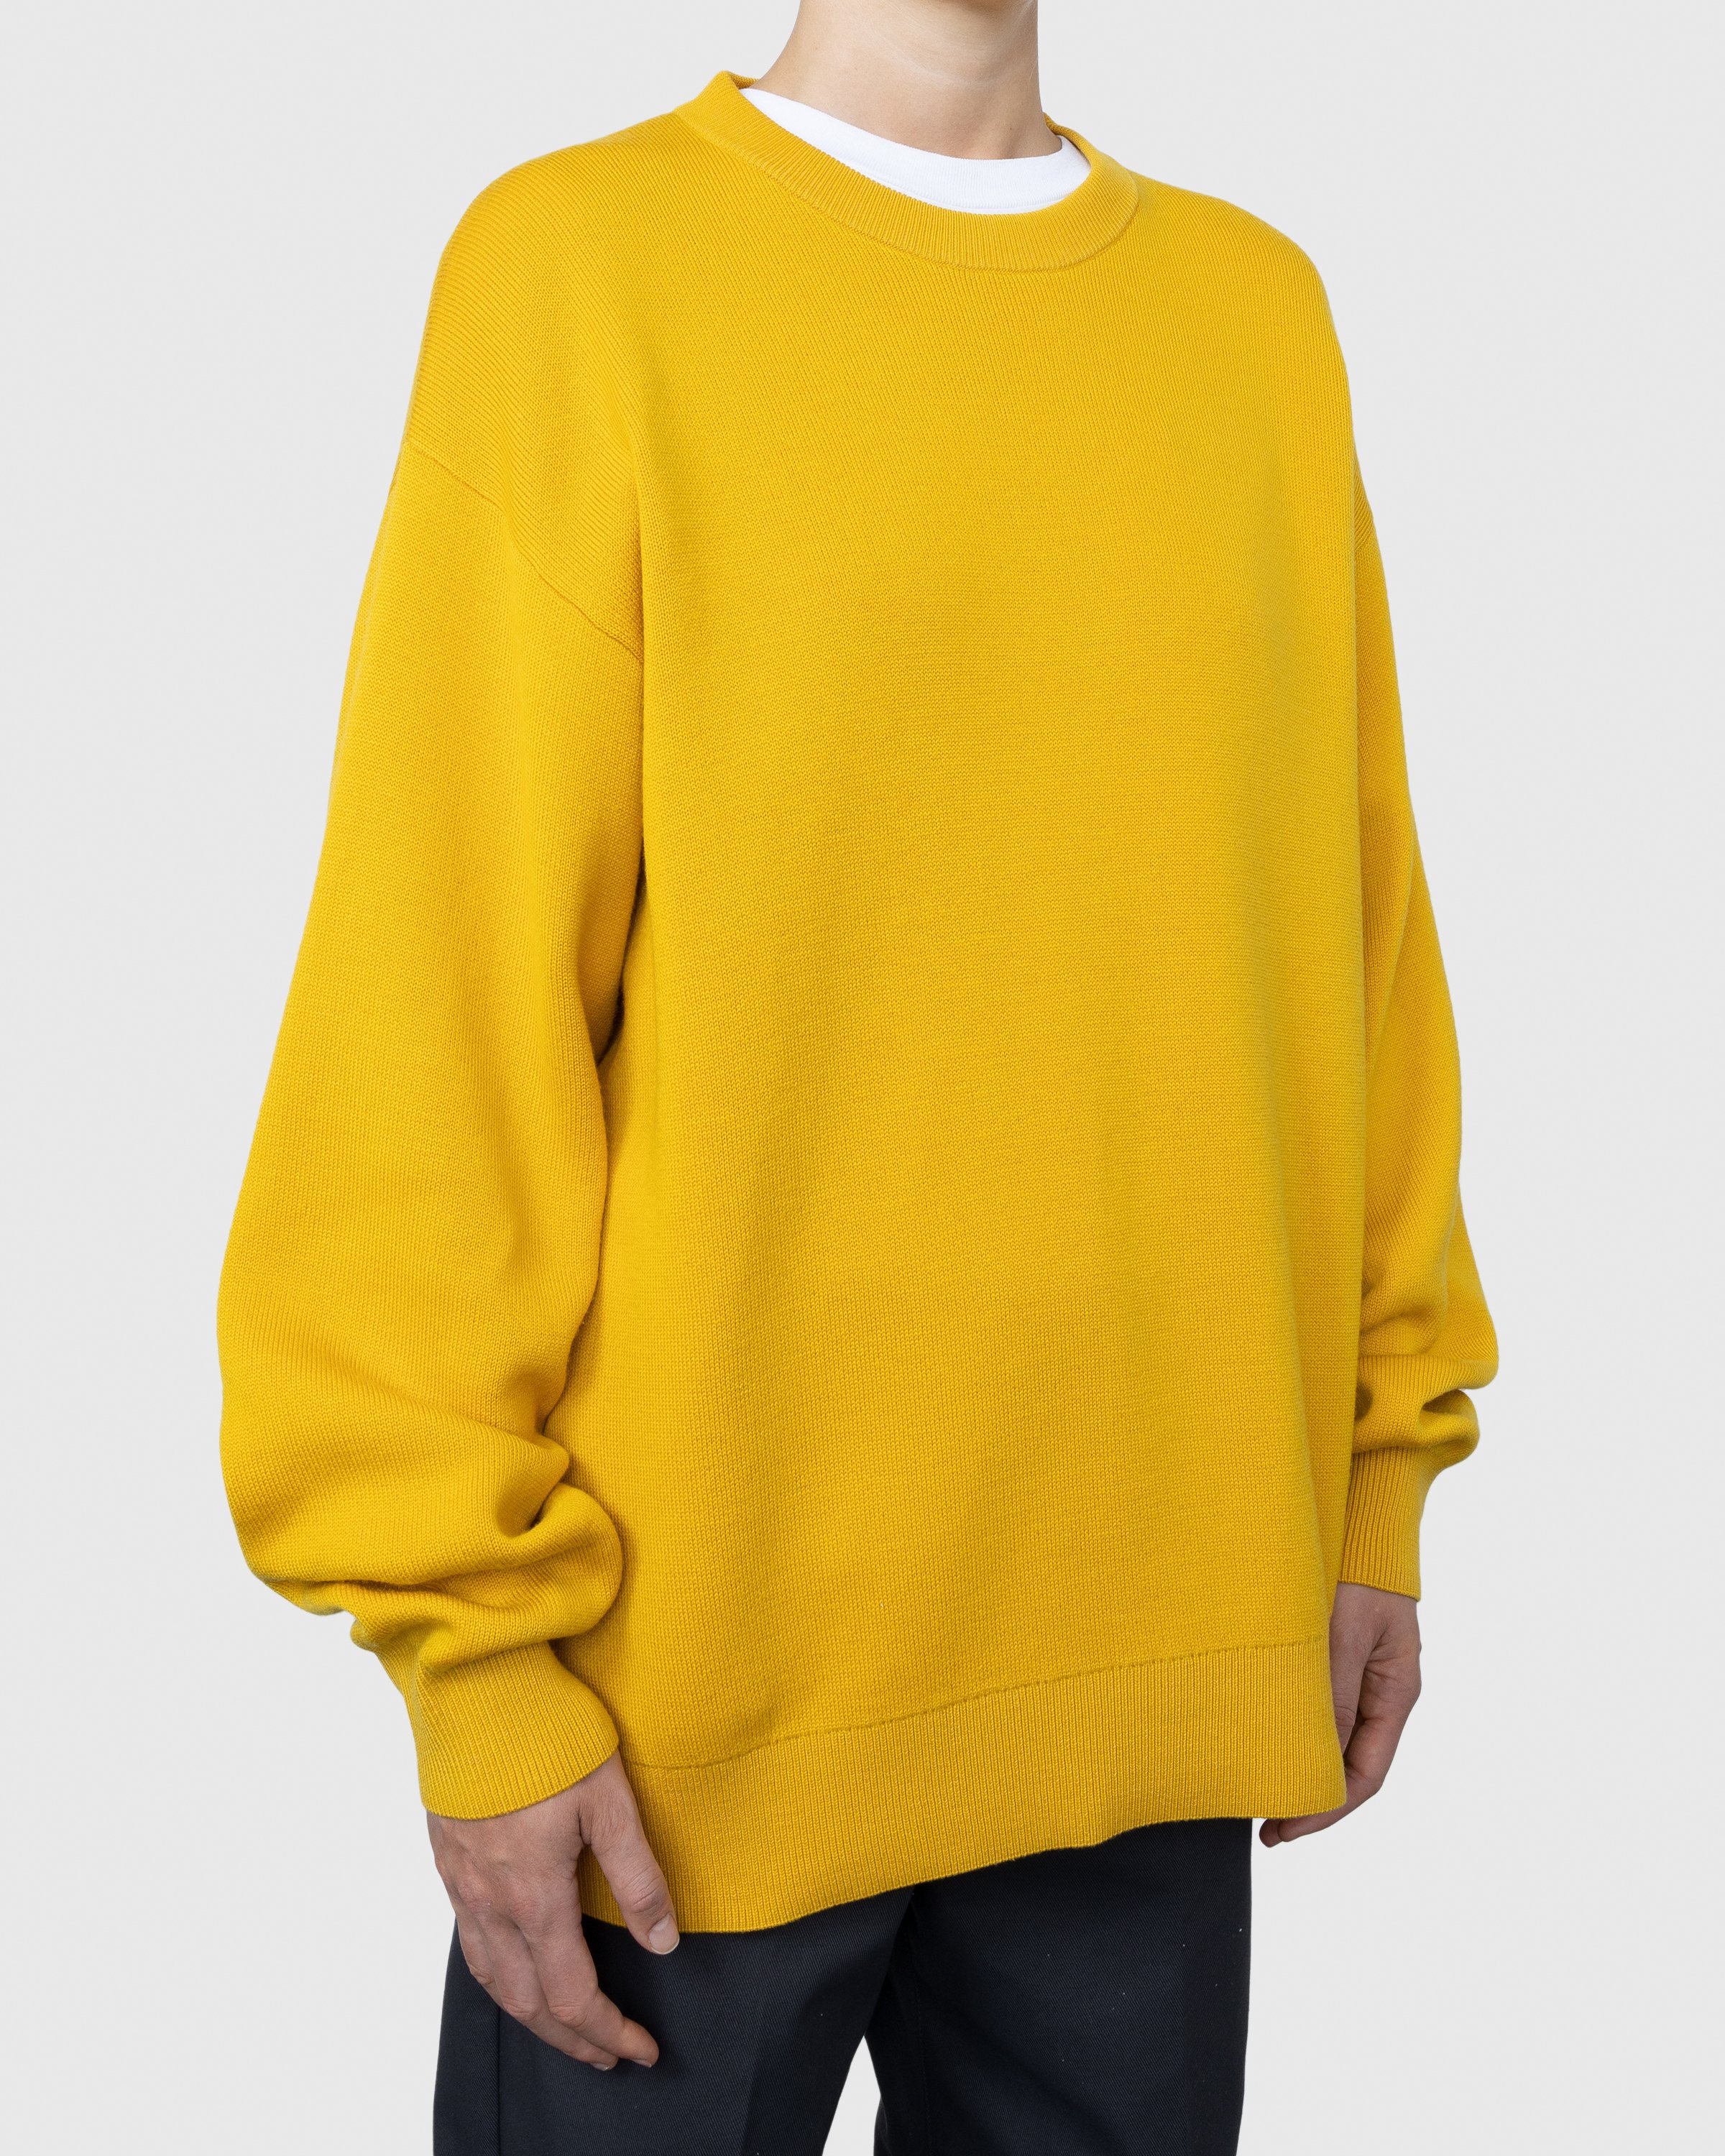 Acne Studios - Merino Wool Crewneck Sweater Yellow - Clothing - Yellow - Image 3